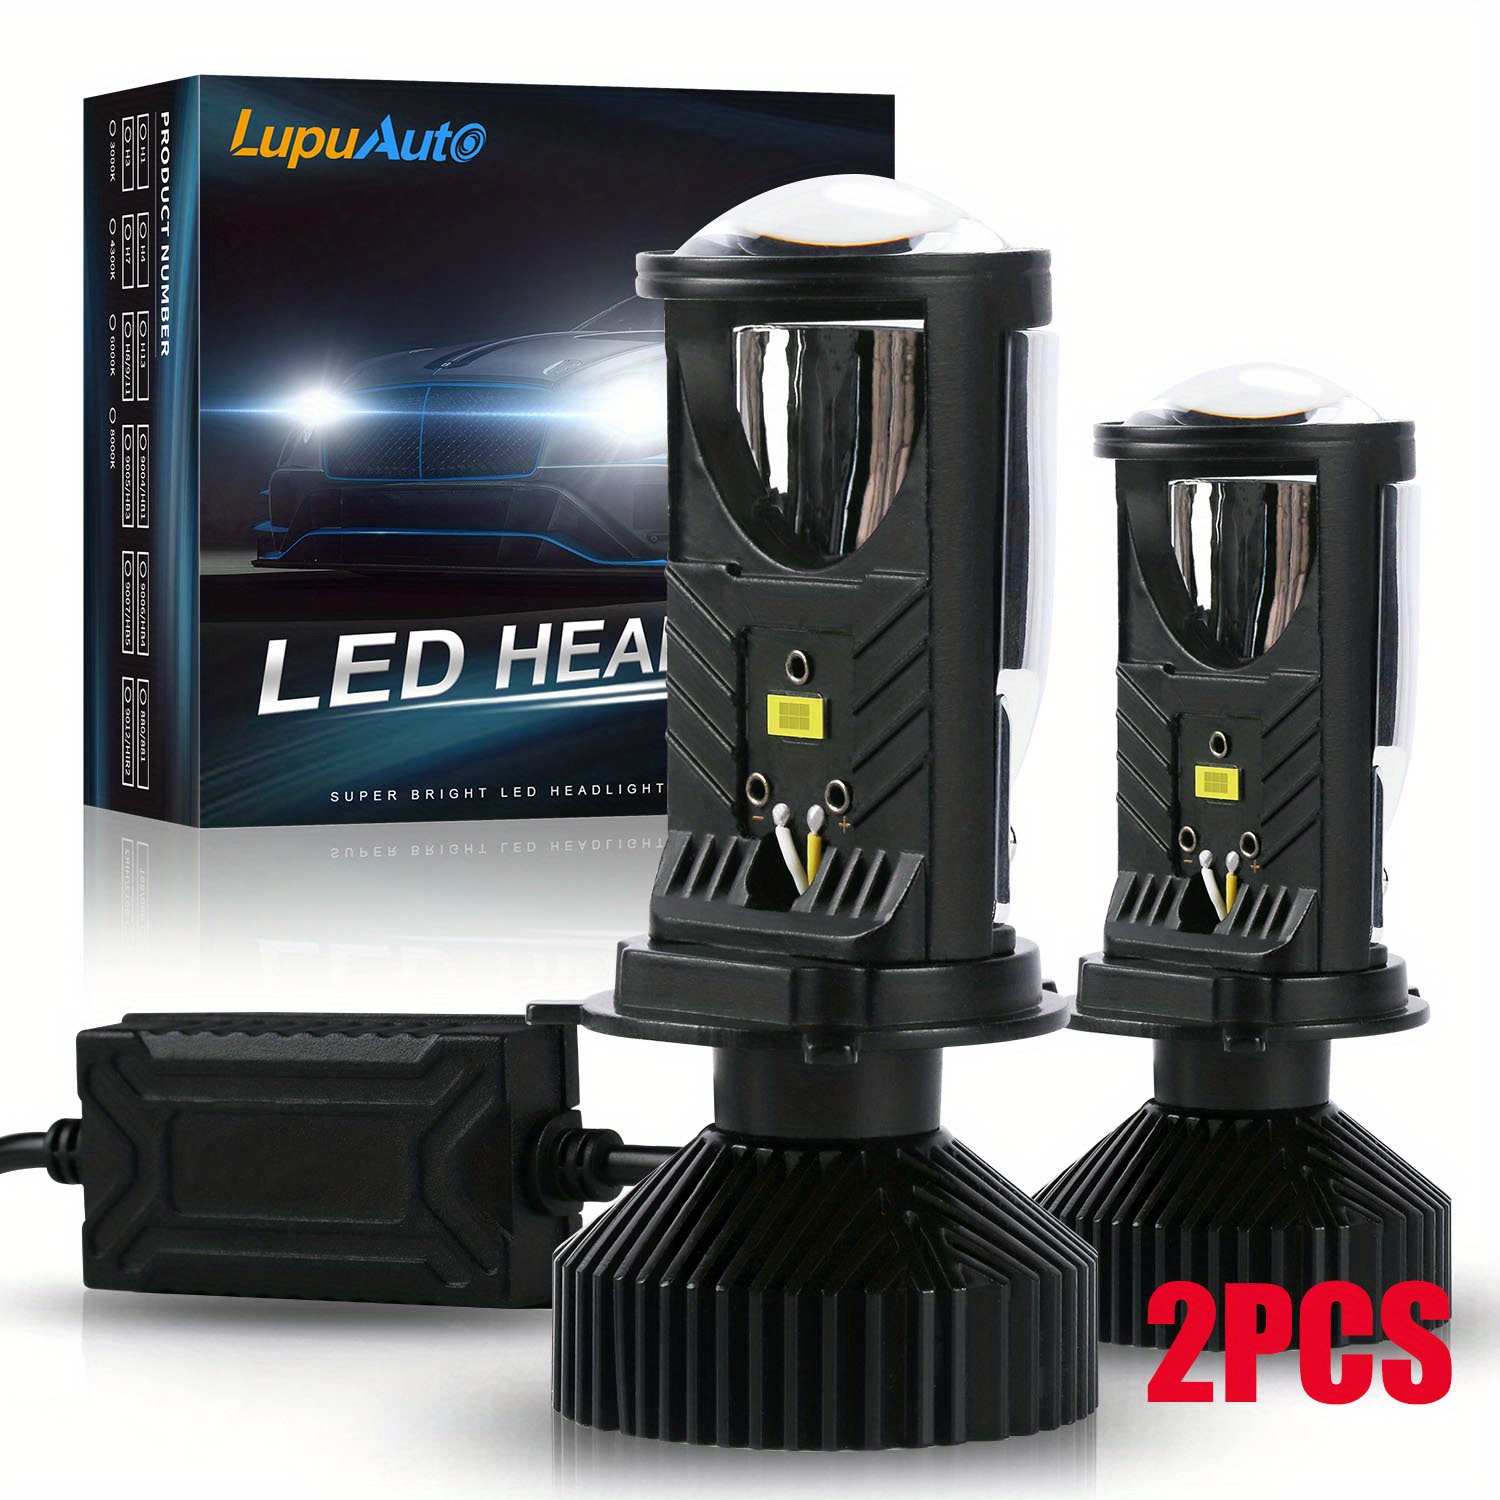 H4 LED Headlight Bulbs 110W 10000LM Mini Bi-LED Projector Lens Headlig